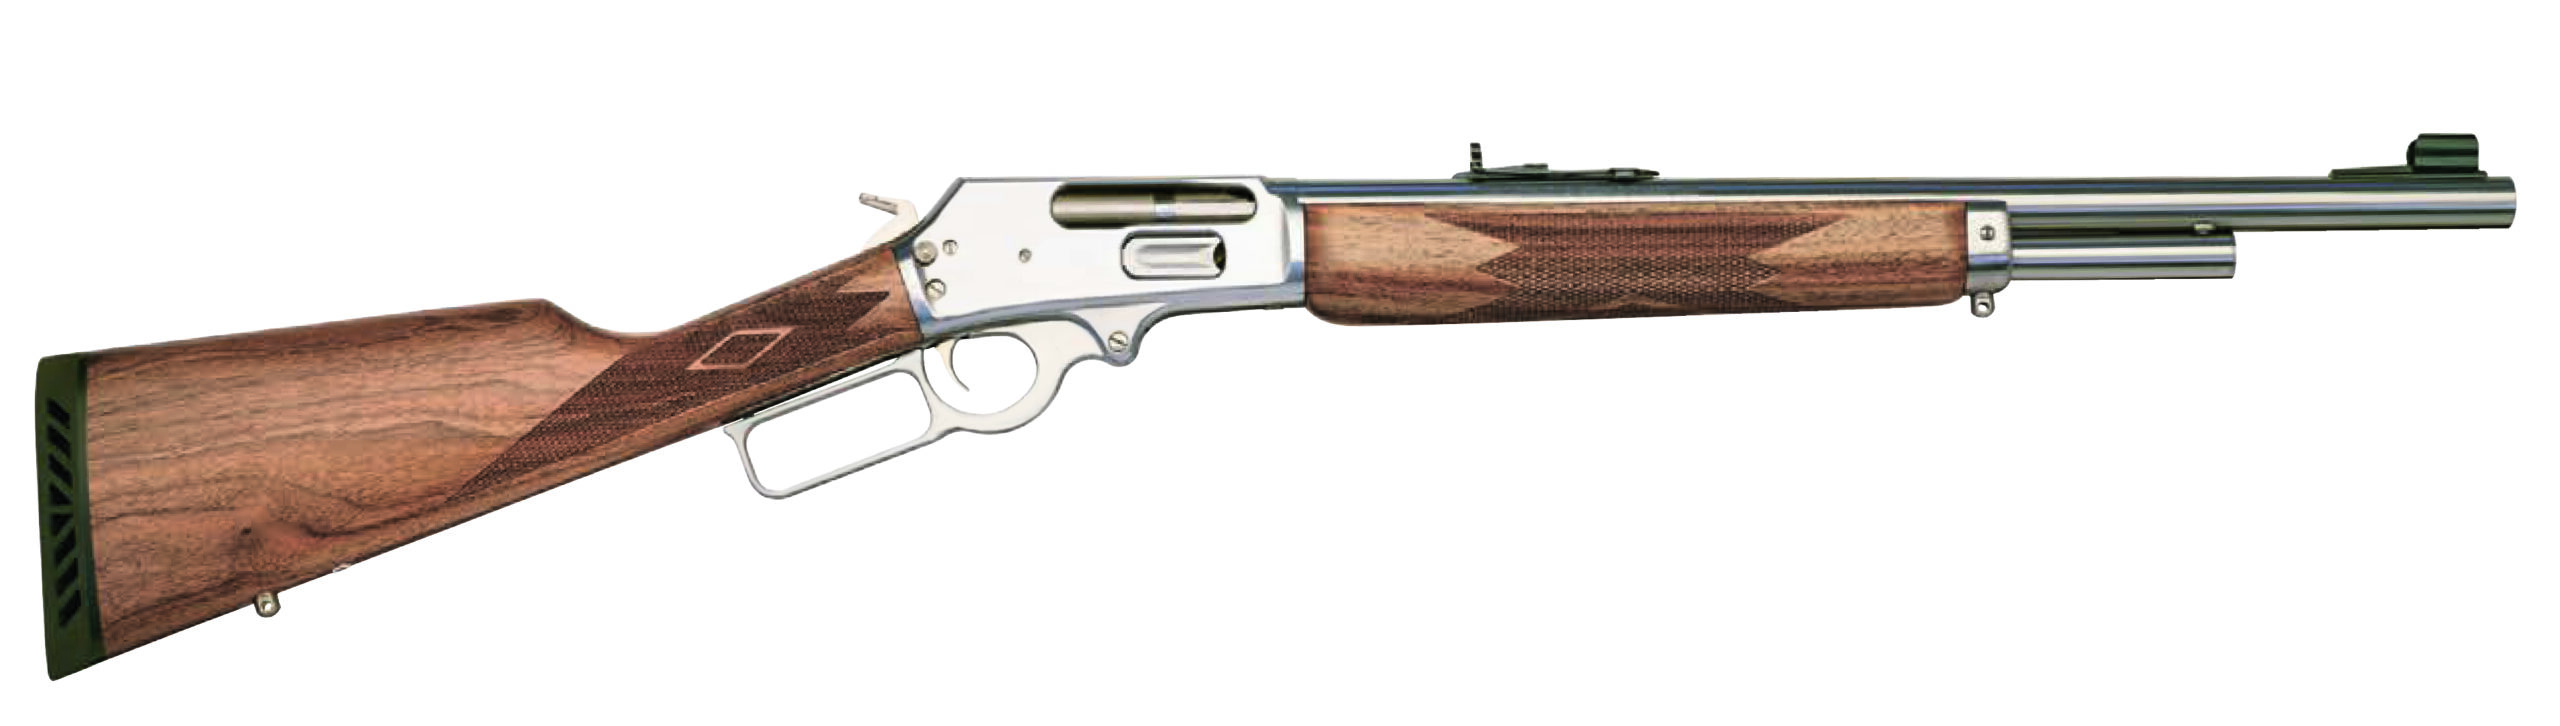 The Marlin 1895 Guide Gun is purpose built for Alaska game.